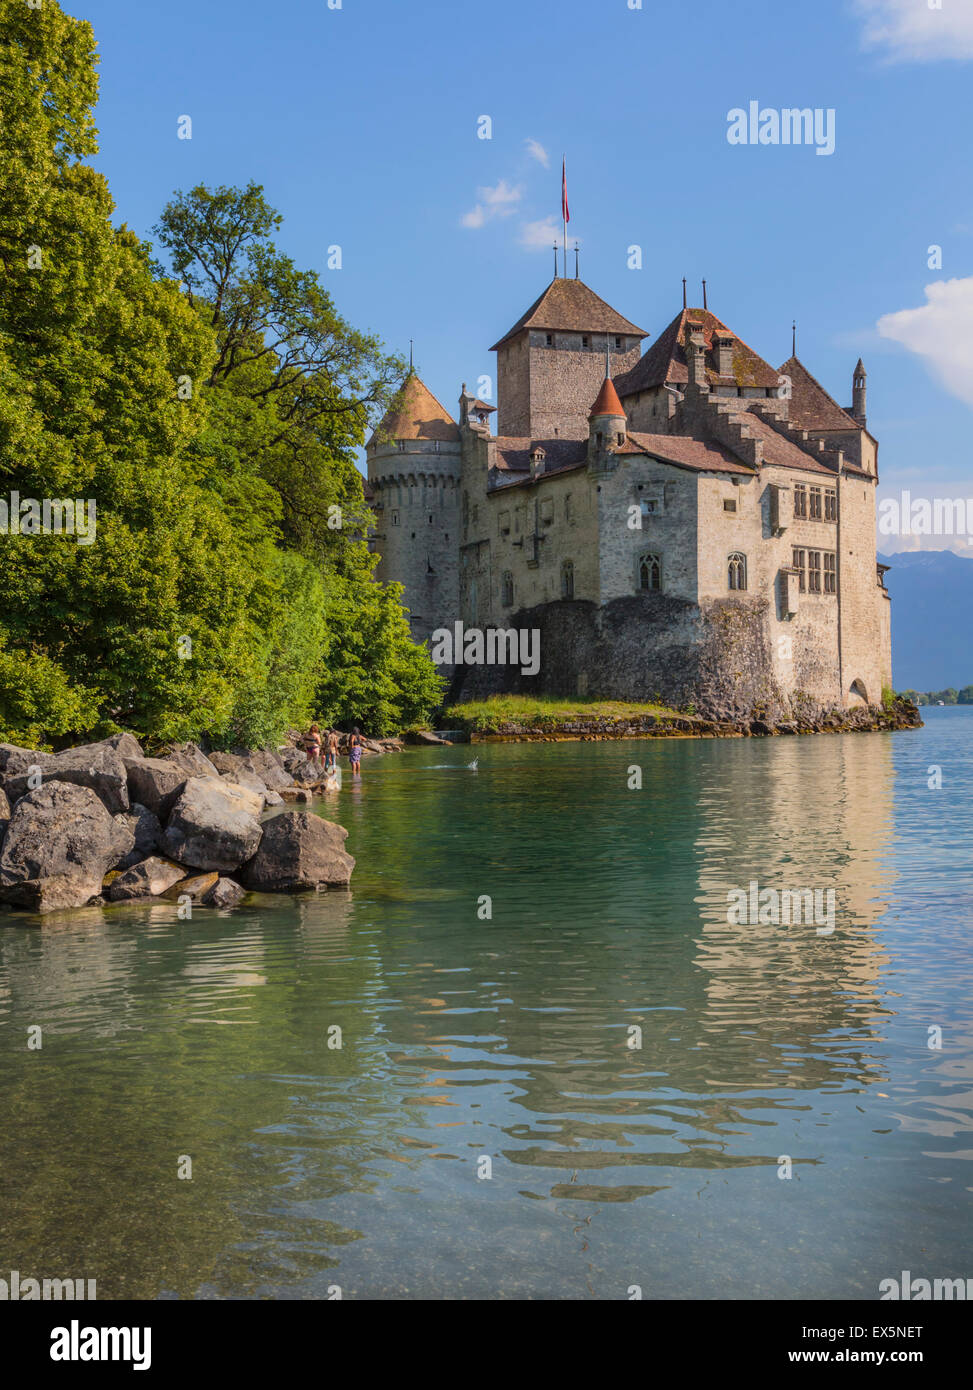 Veytaux, Vaud Canton, Switzerland.  Chateau de Chillon on shore of Lake Geneva (Lac Leman). Stock Photo